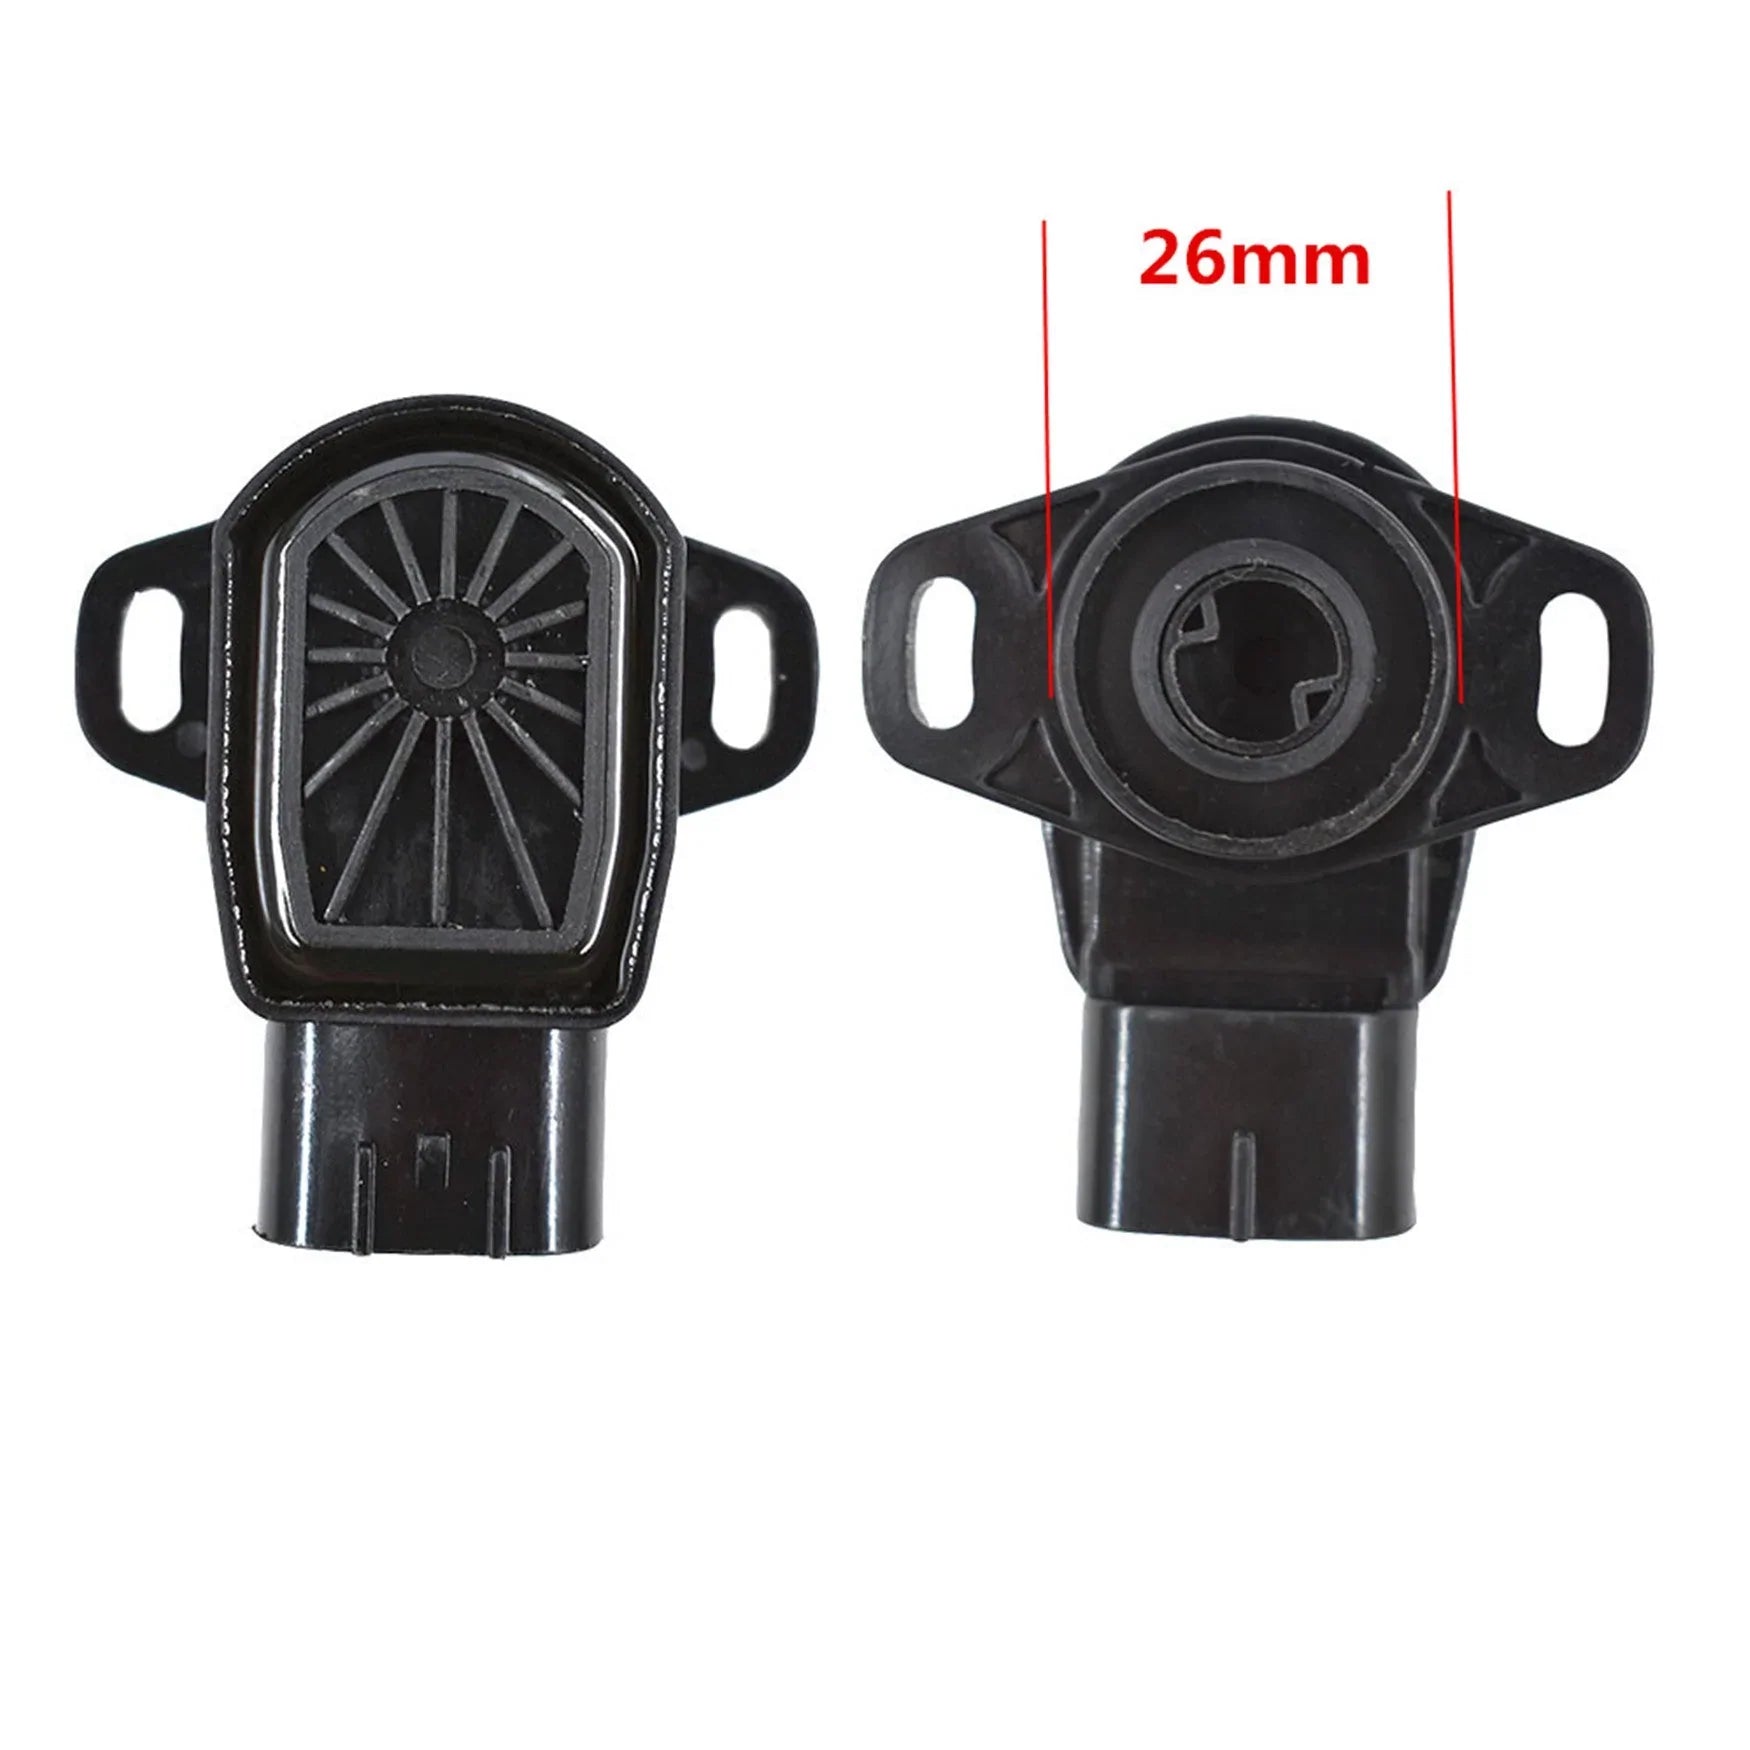 Throttle Position Sensor TPS Replacement for Polaris Ranger Sportsman RZR500 570 800 3131705 3140173 LAB WORK MOTO